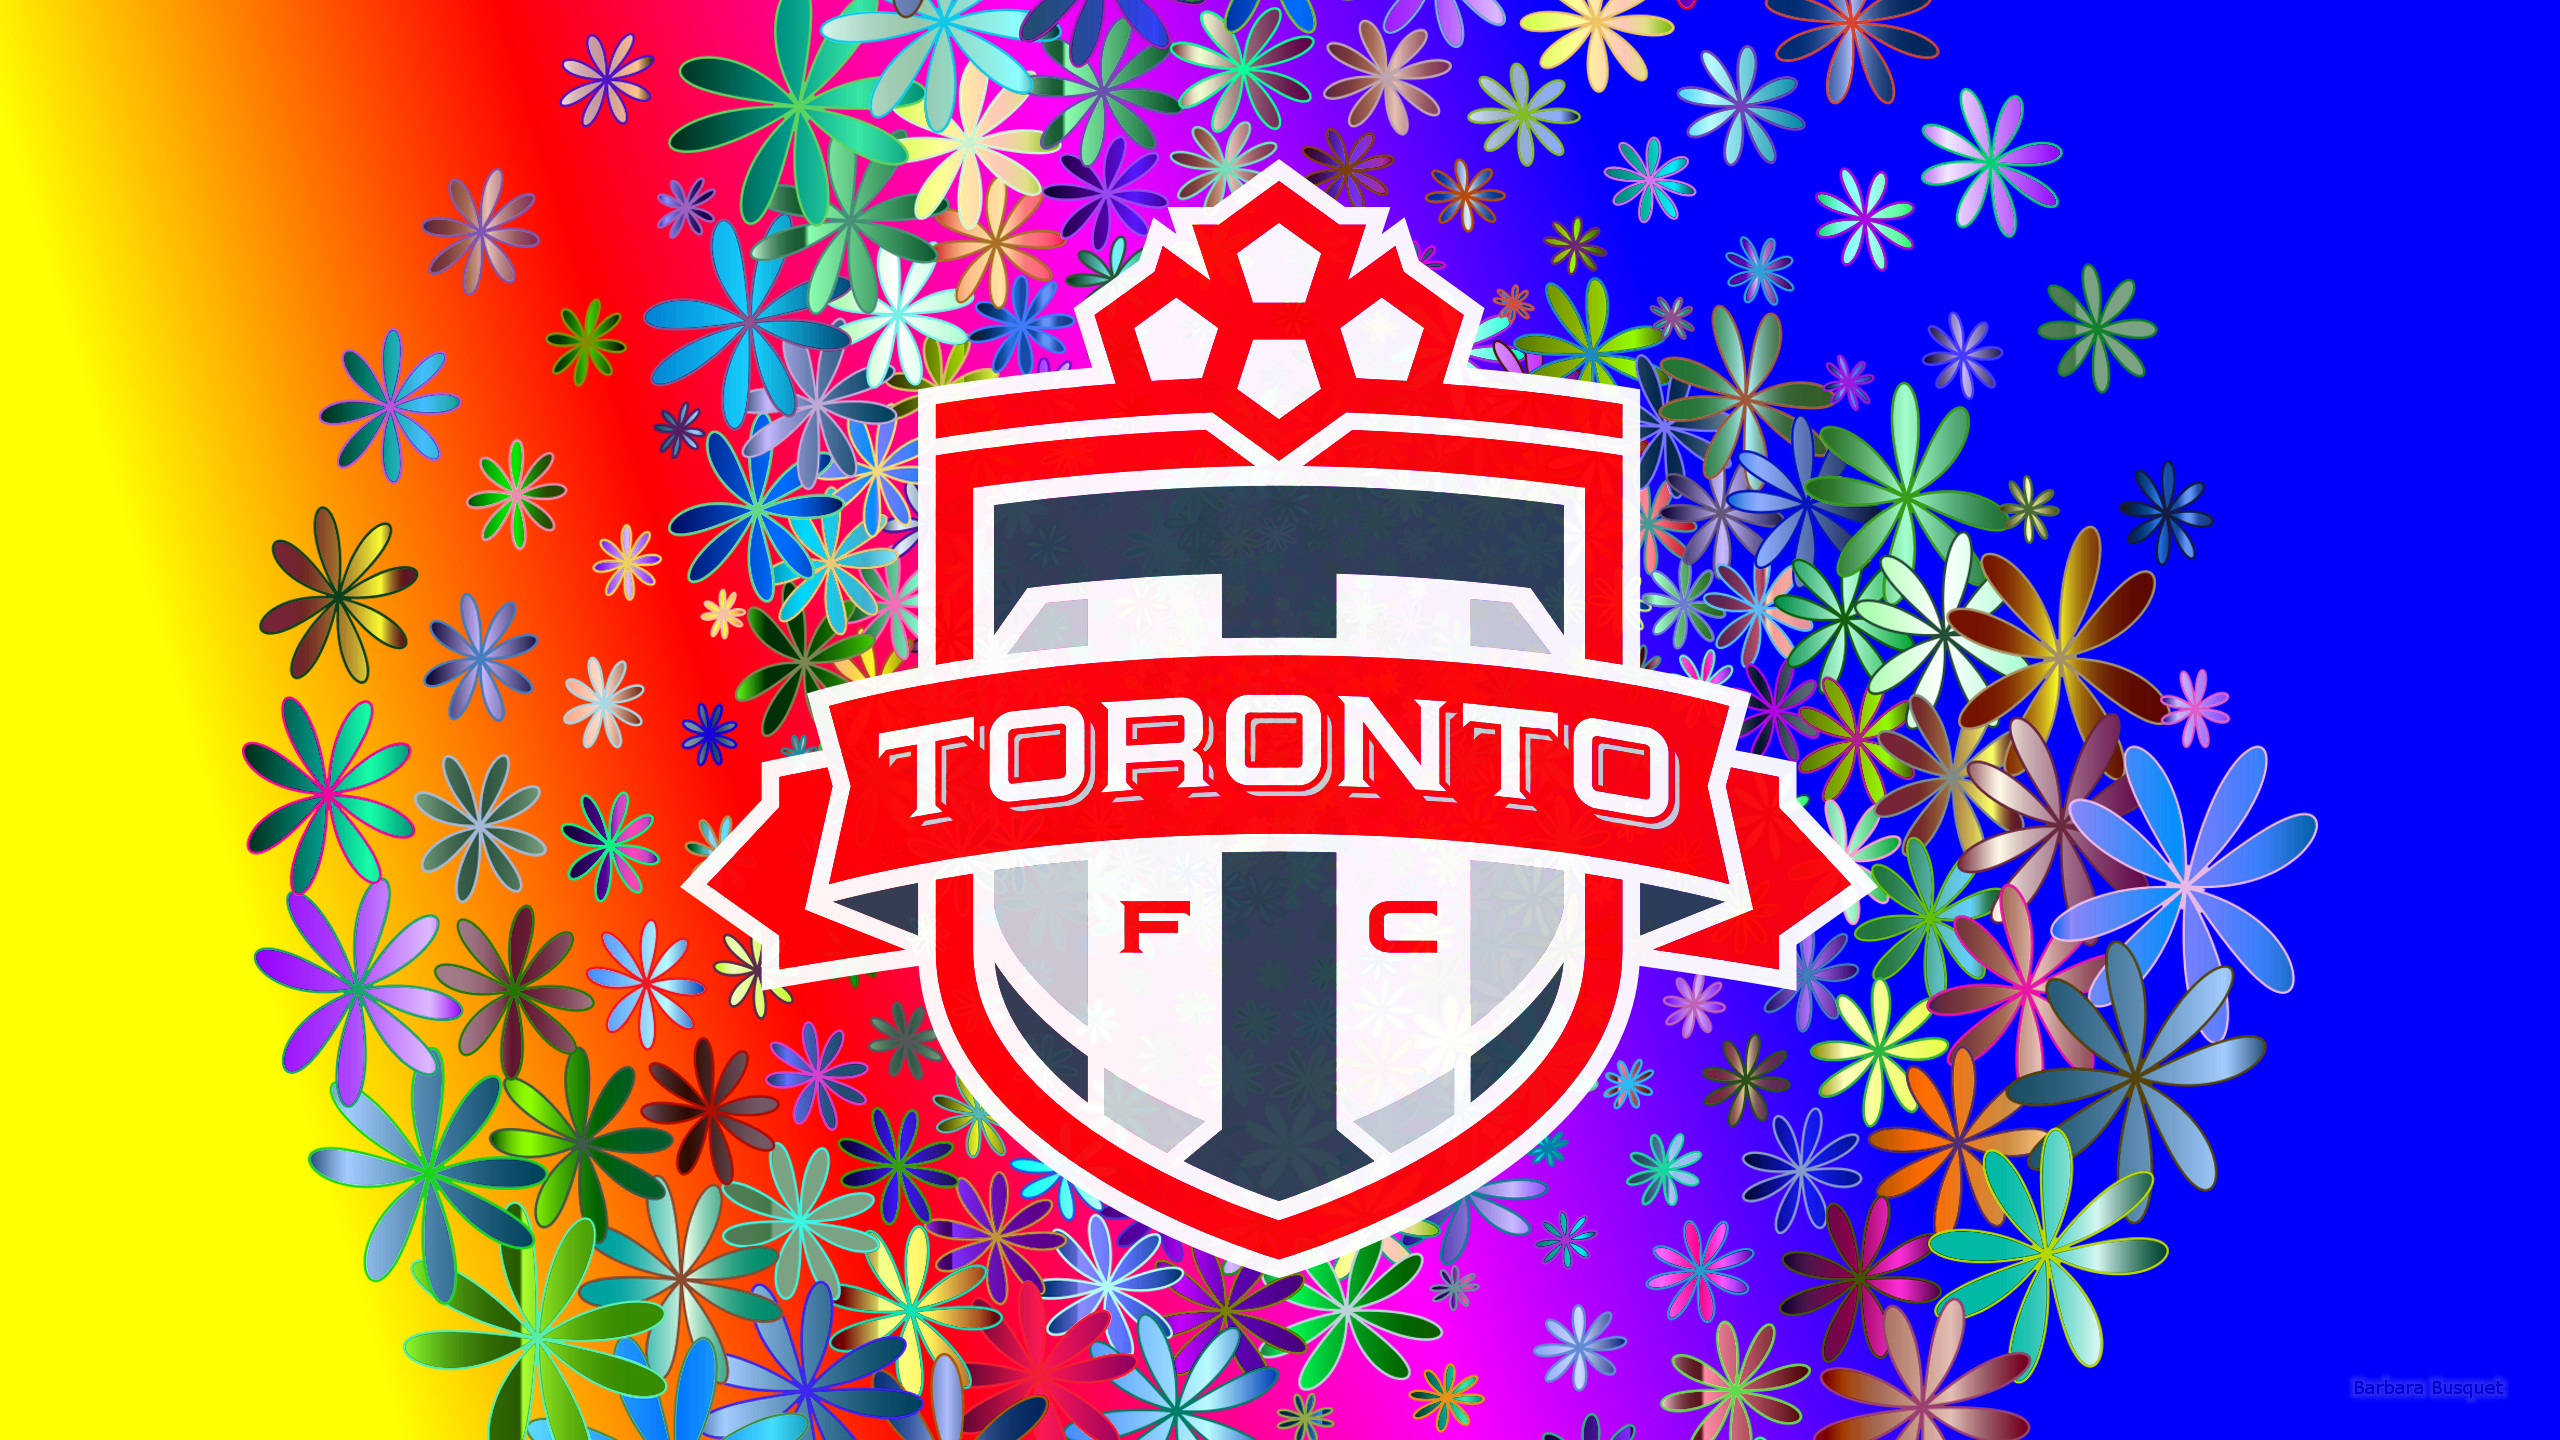 Toronto FC mls soccer sports wallpaper, 2560x1440, 1188540